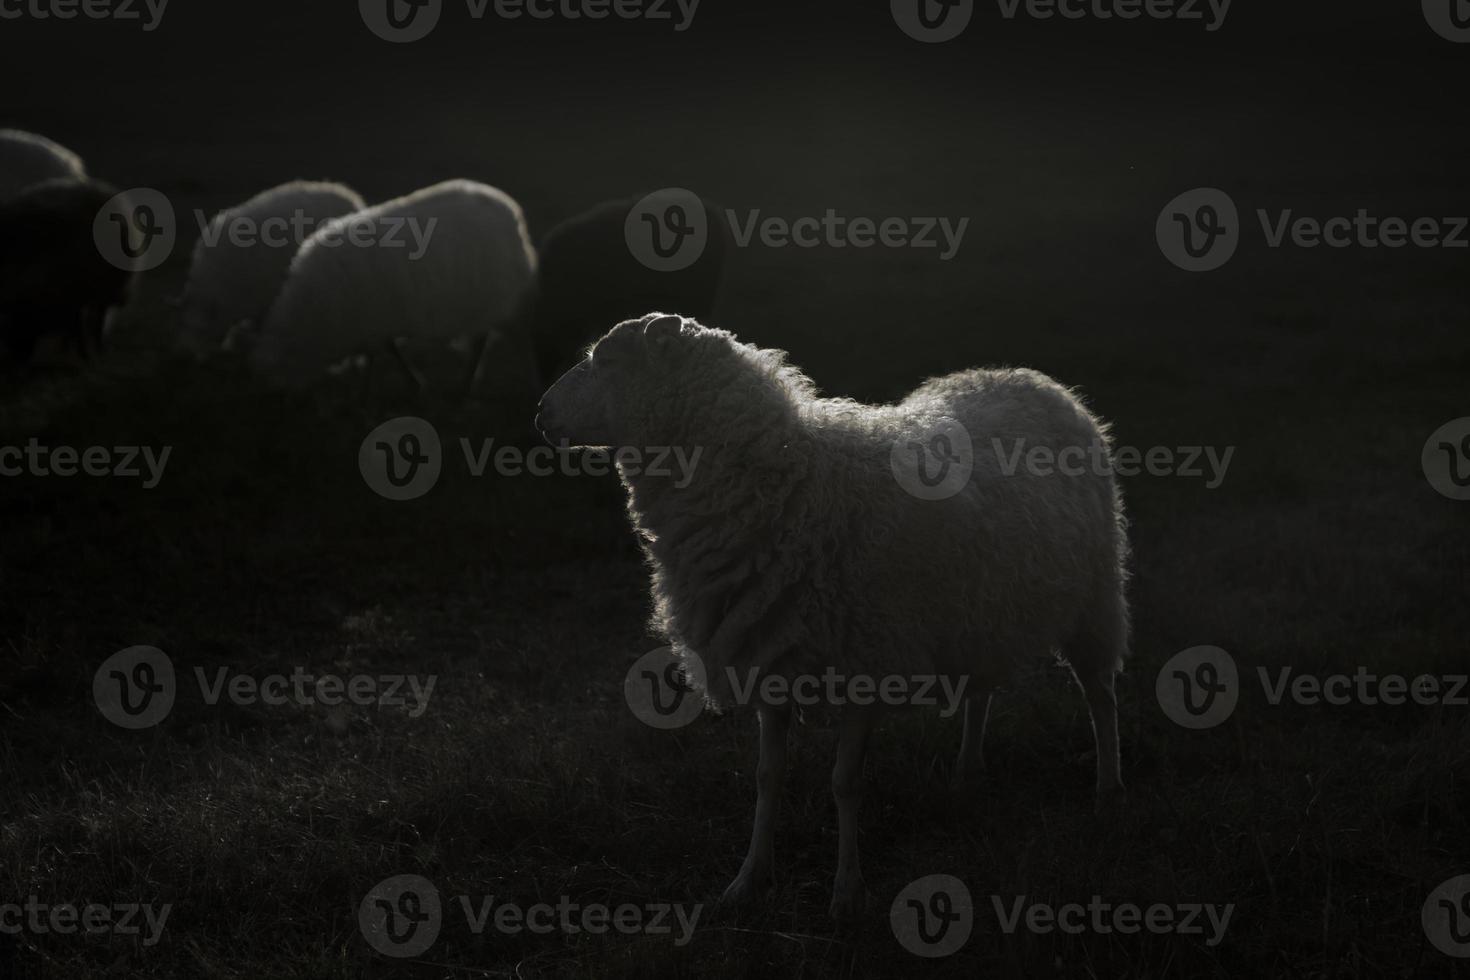 Back lit white sheep photo